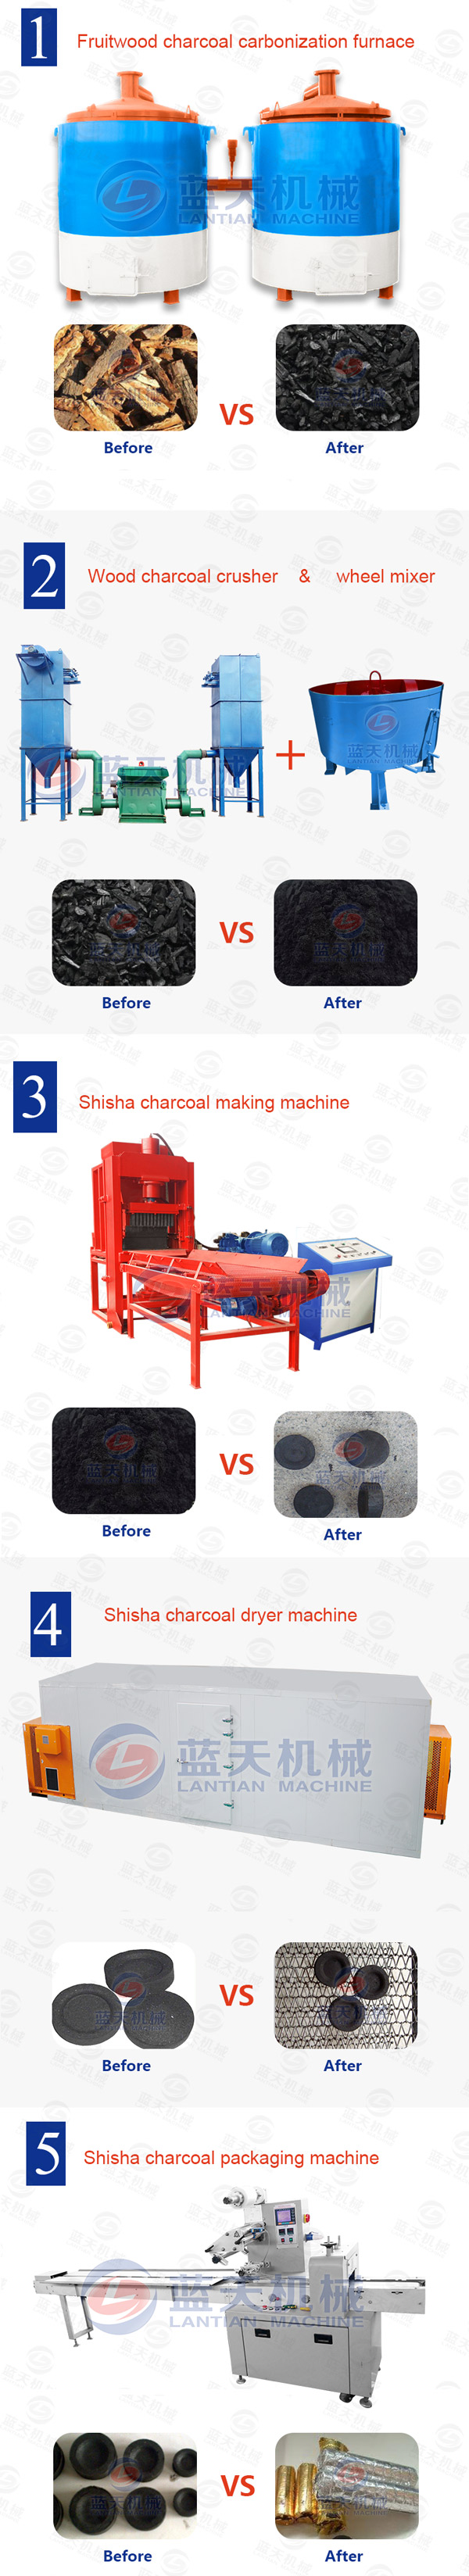 shisha charcoal making equipment